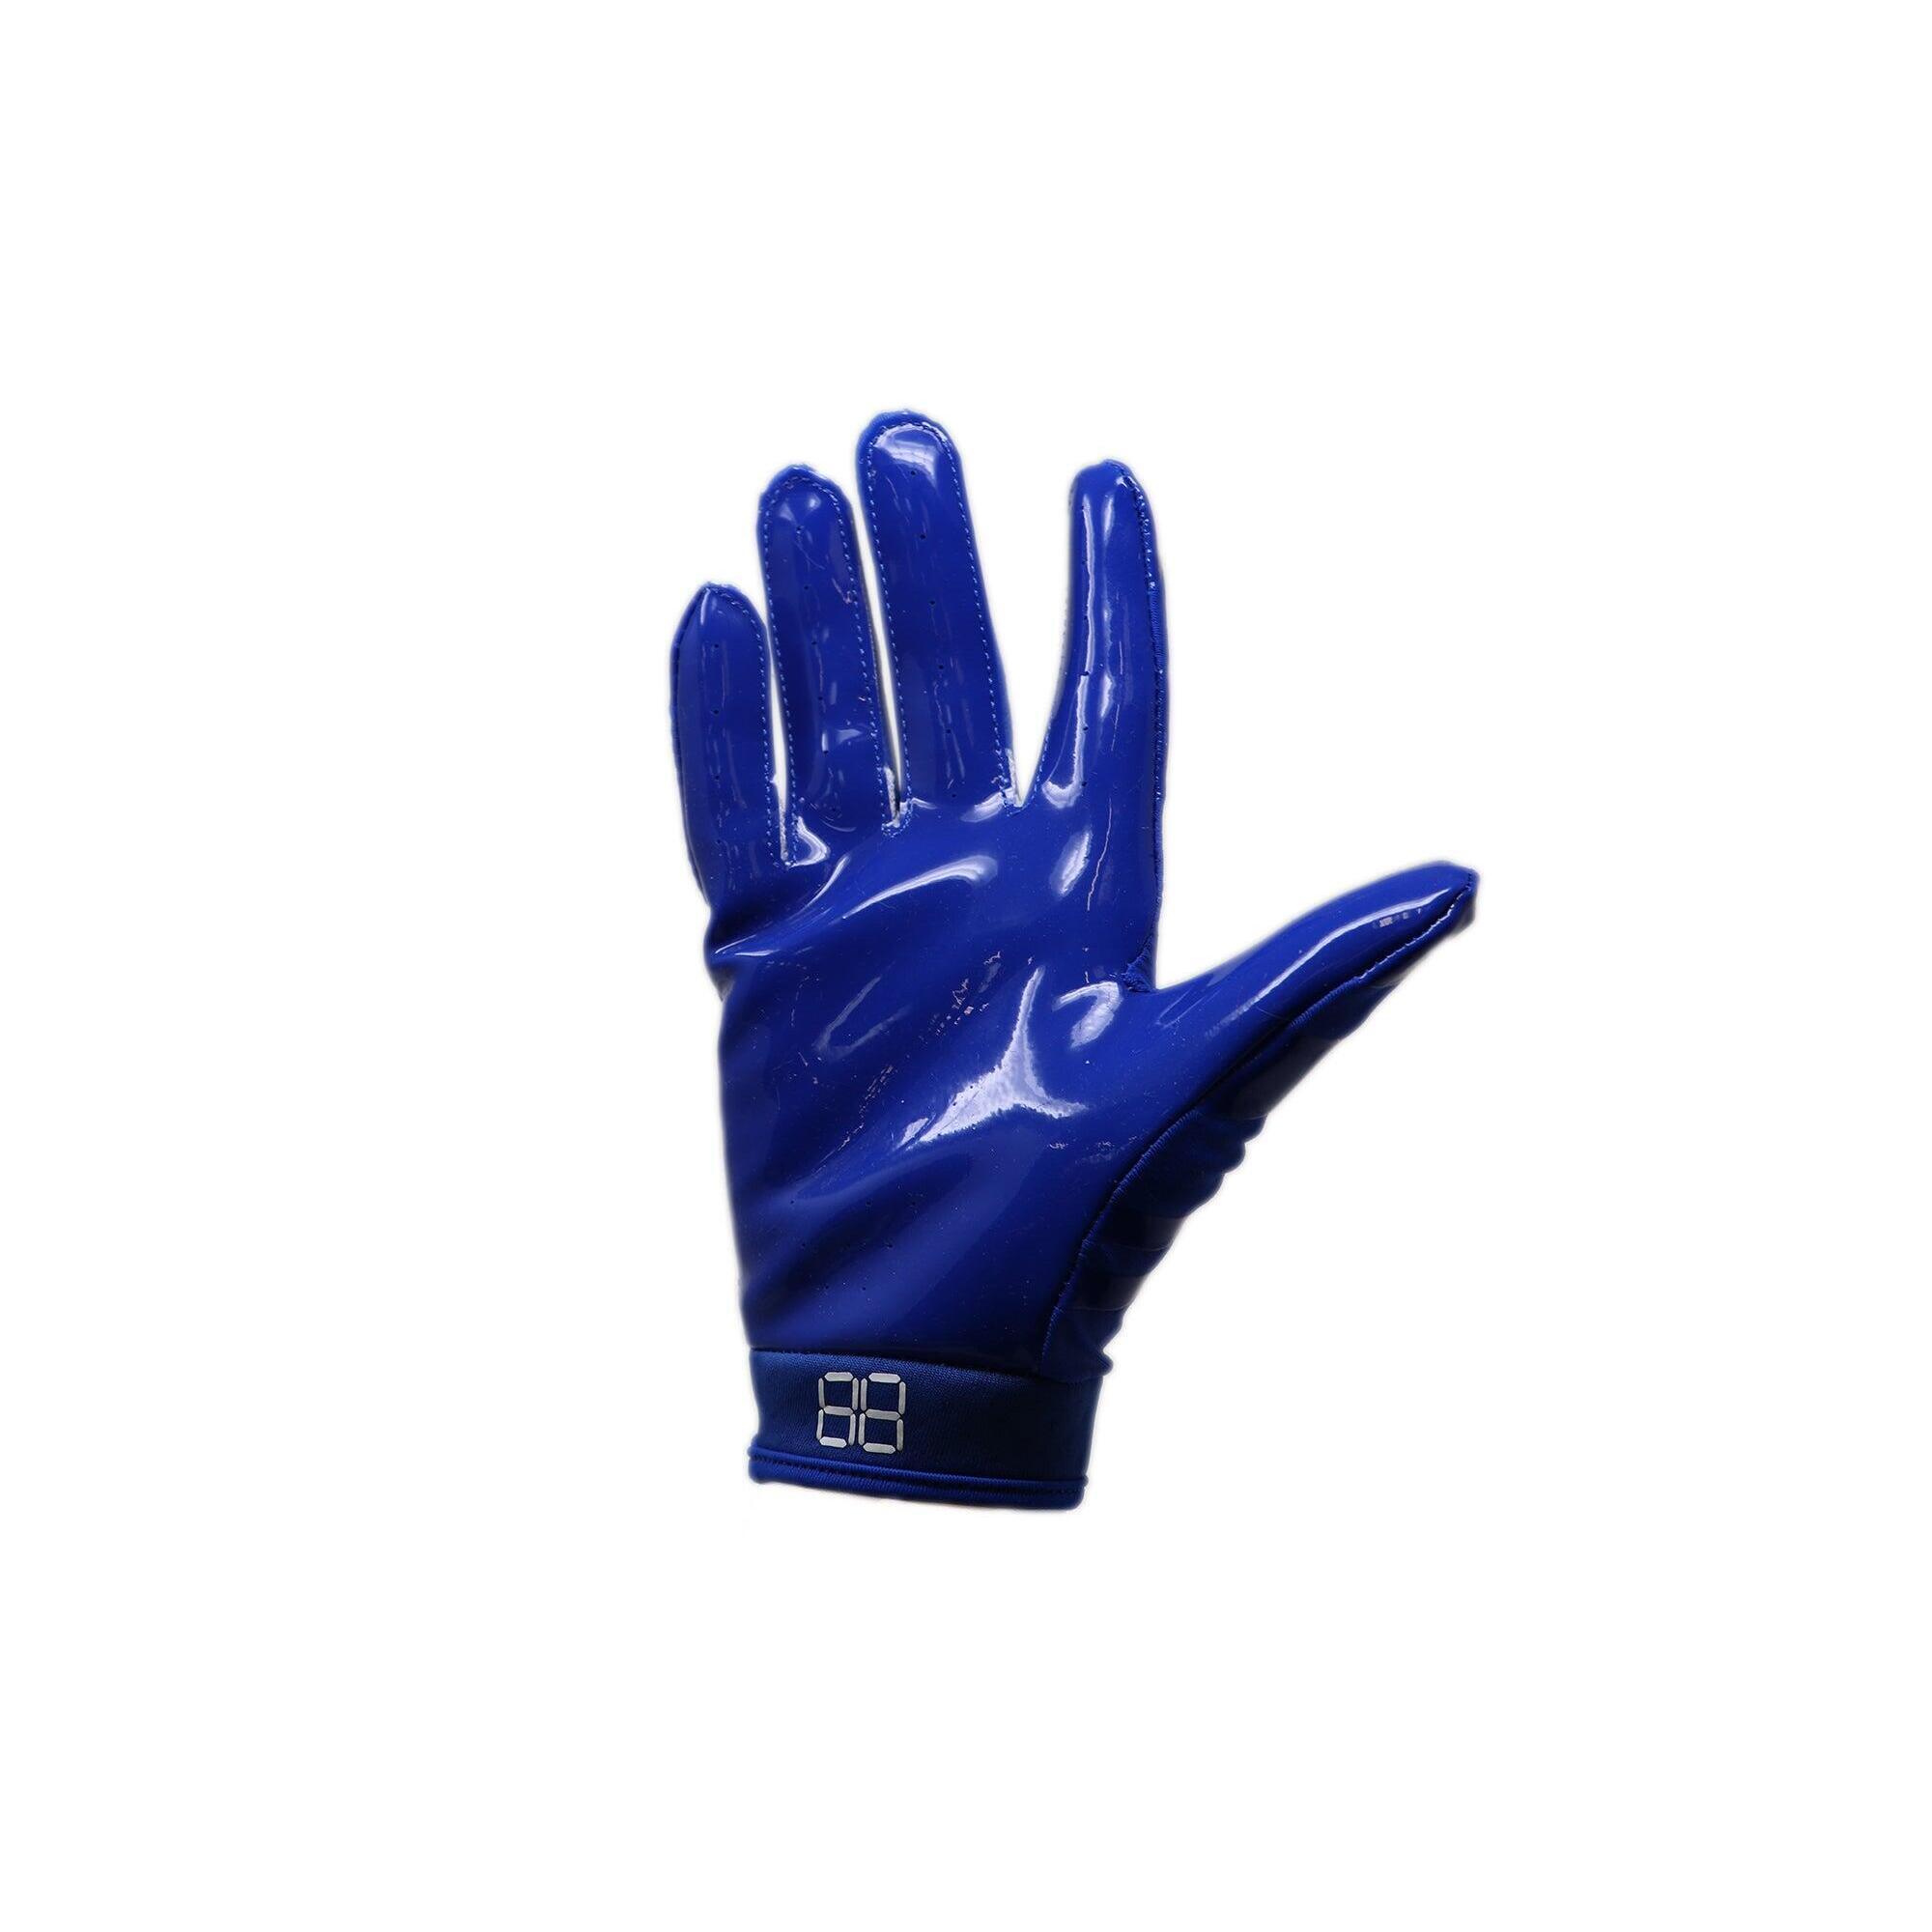  pro receiver american football gloves, RE,DB,RB, Blue FRG-03 3/5